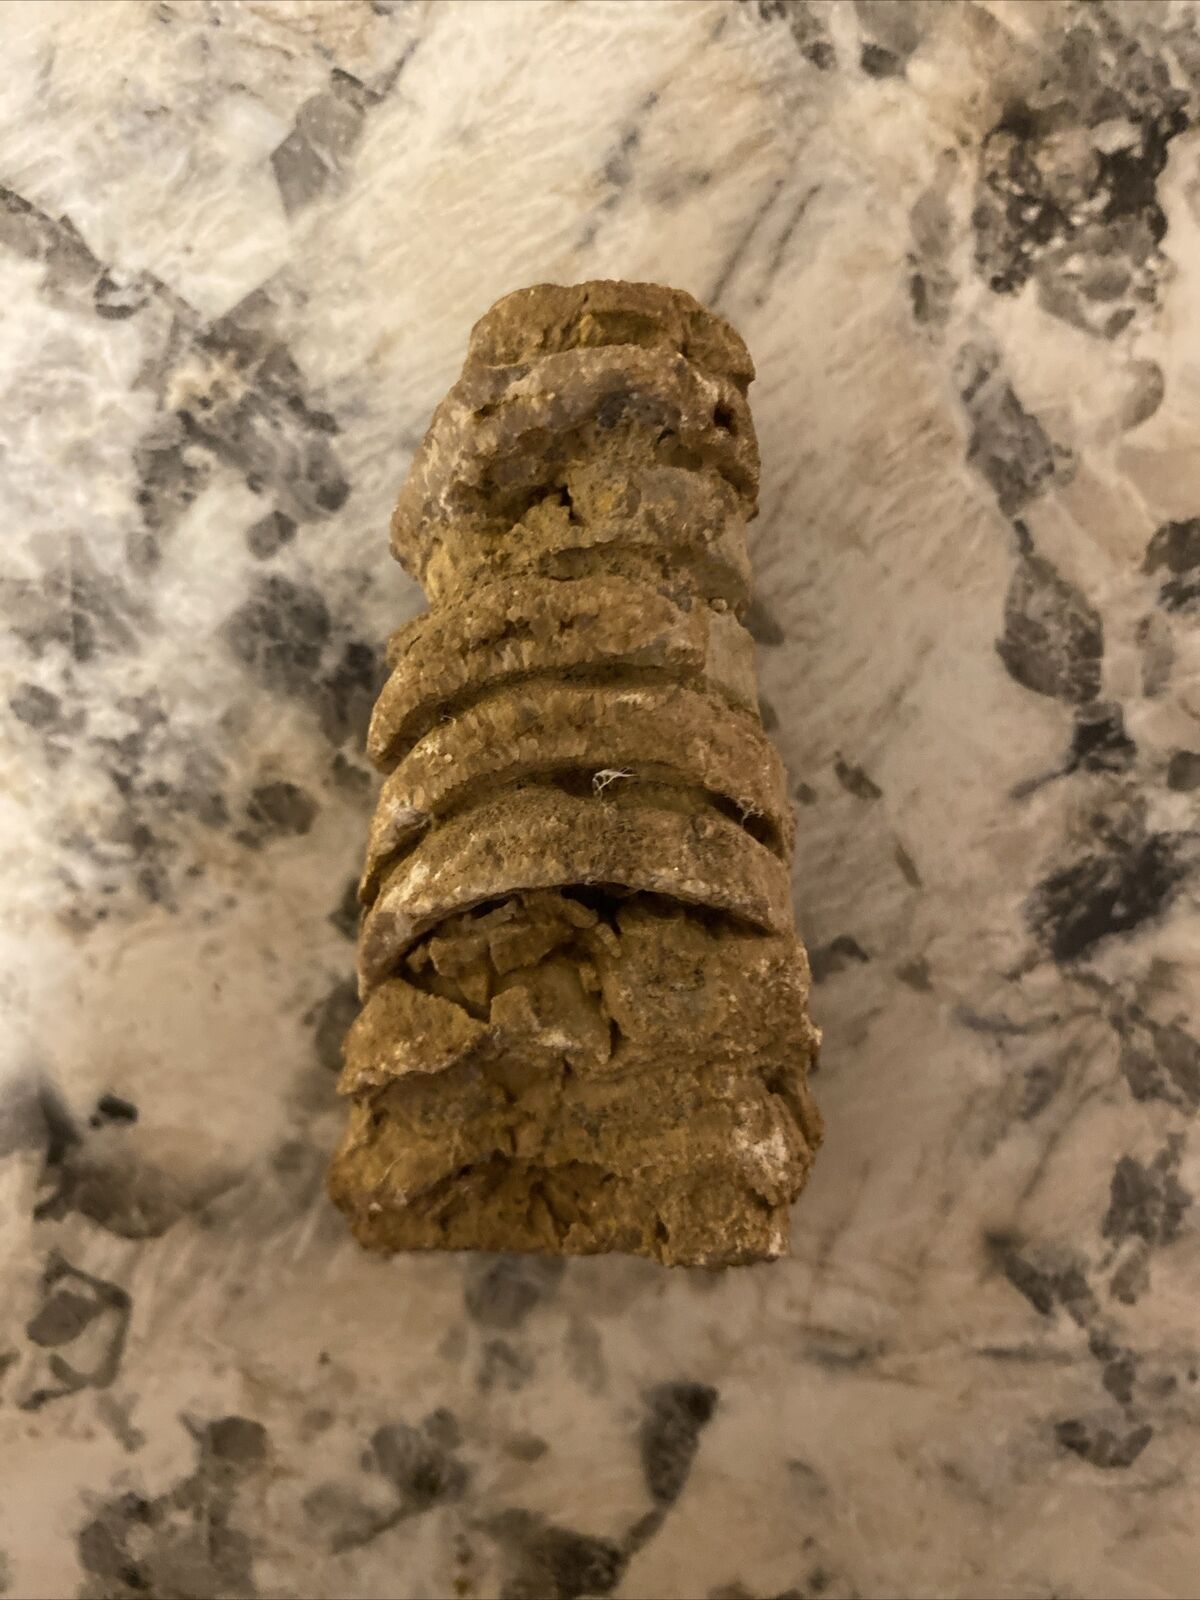 Fossil Of What Looks Like A Back Bone